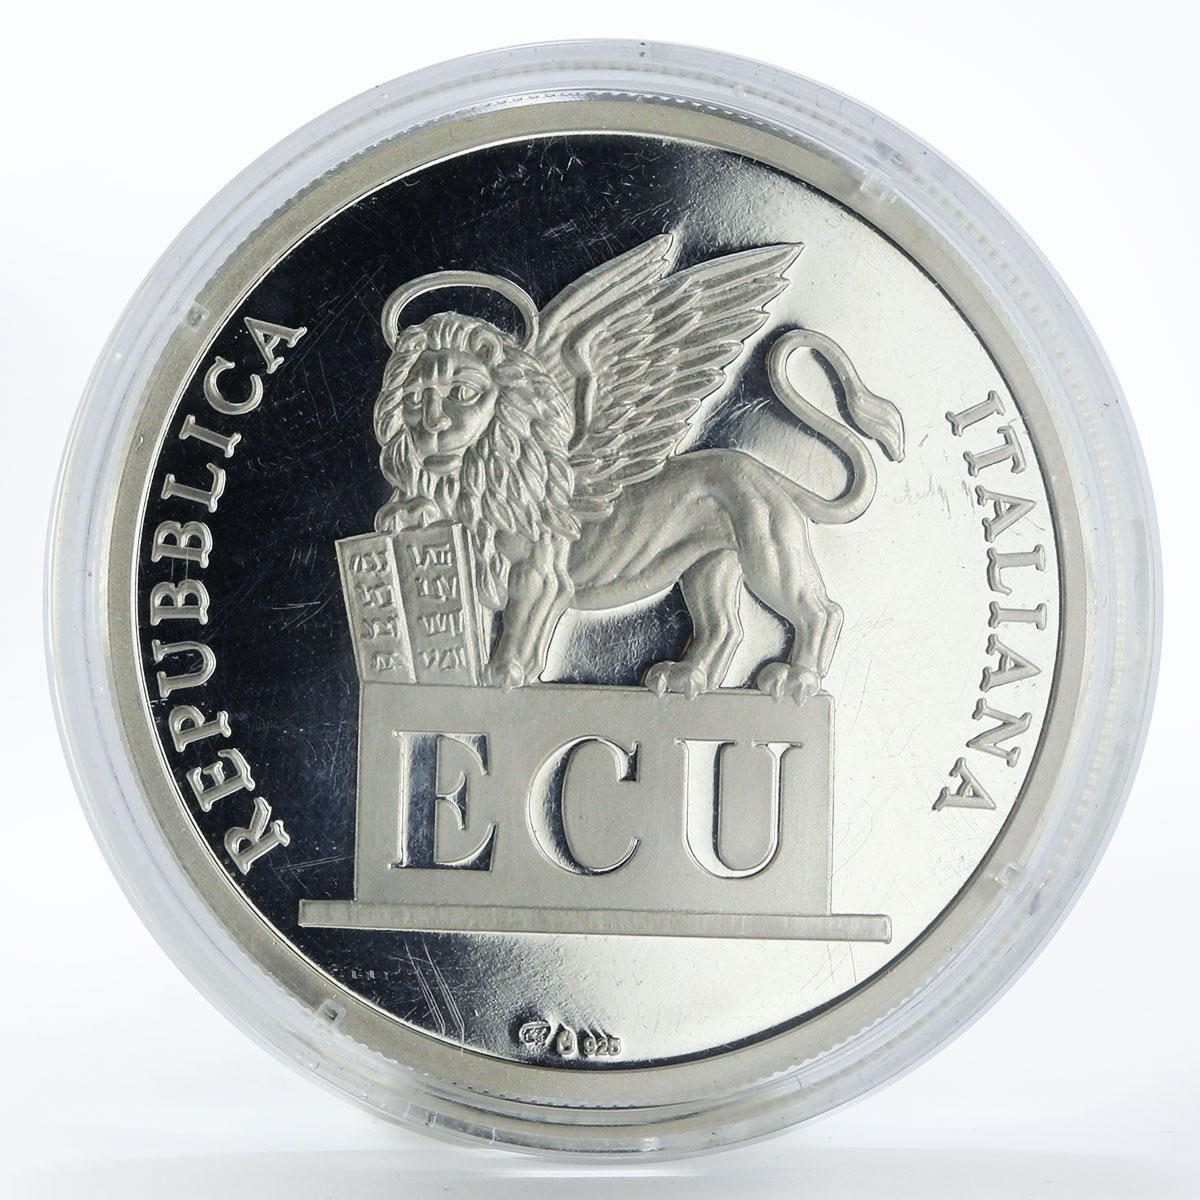 Italy 1 ecu Galileo Galilei astronomy proof silver coin 1993